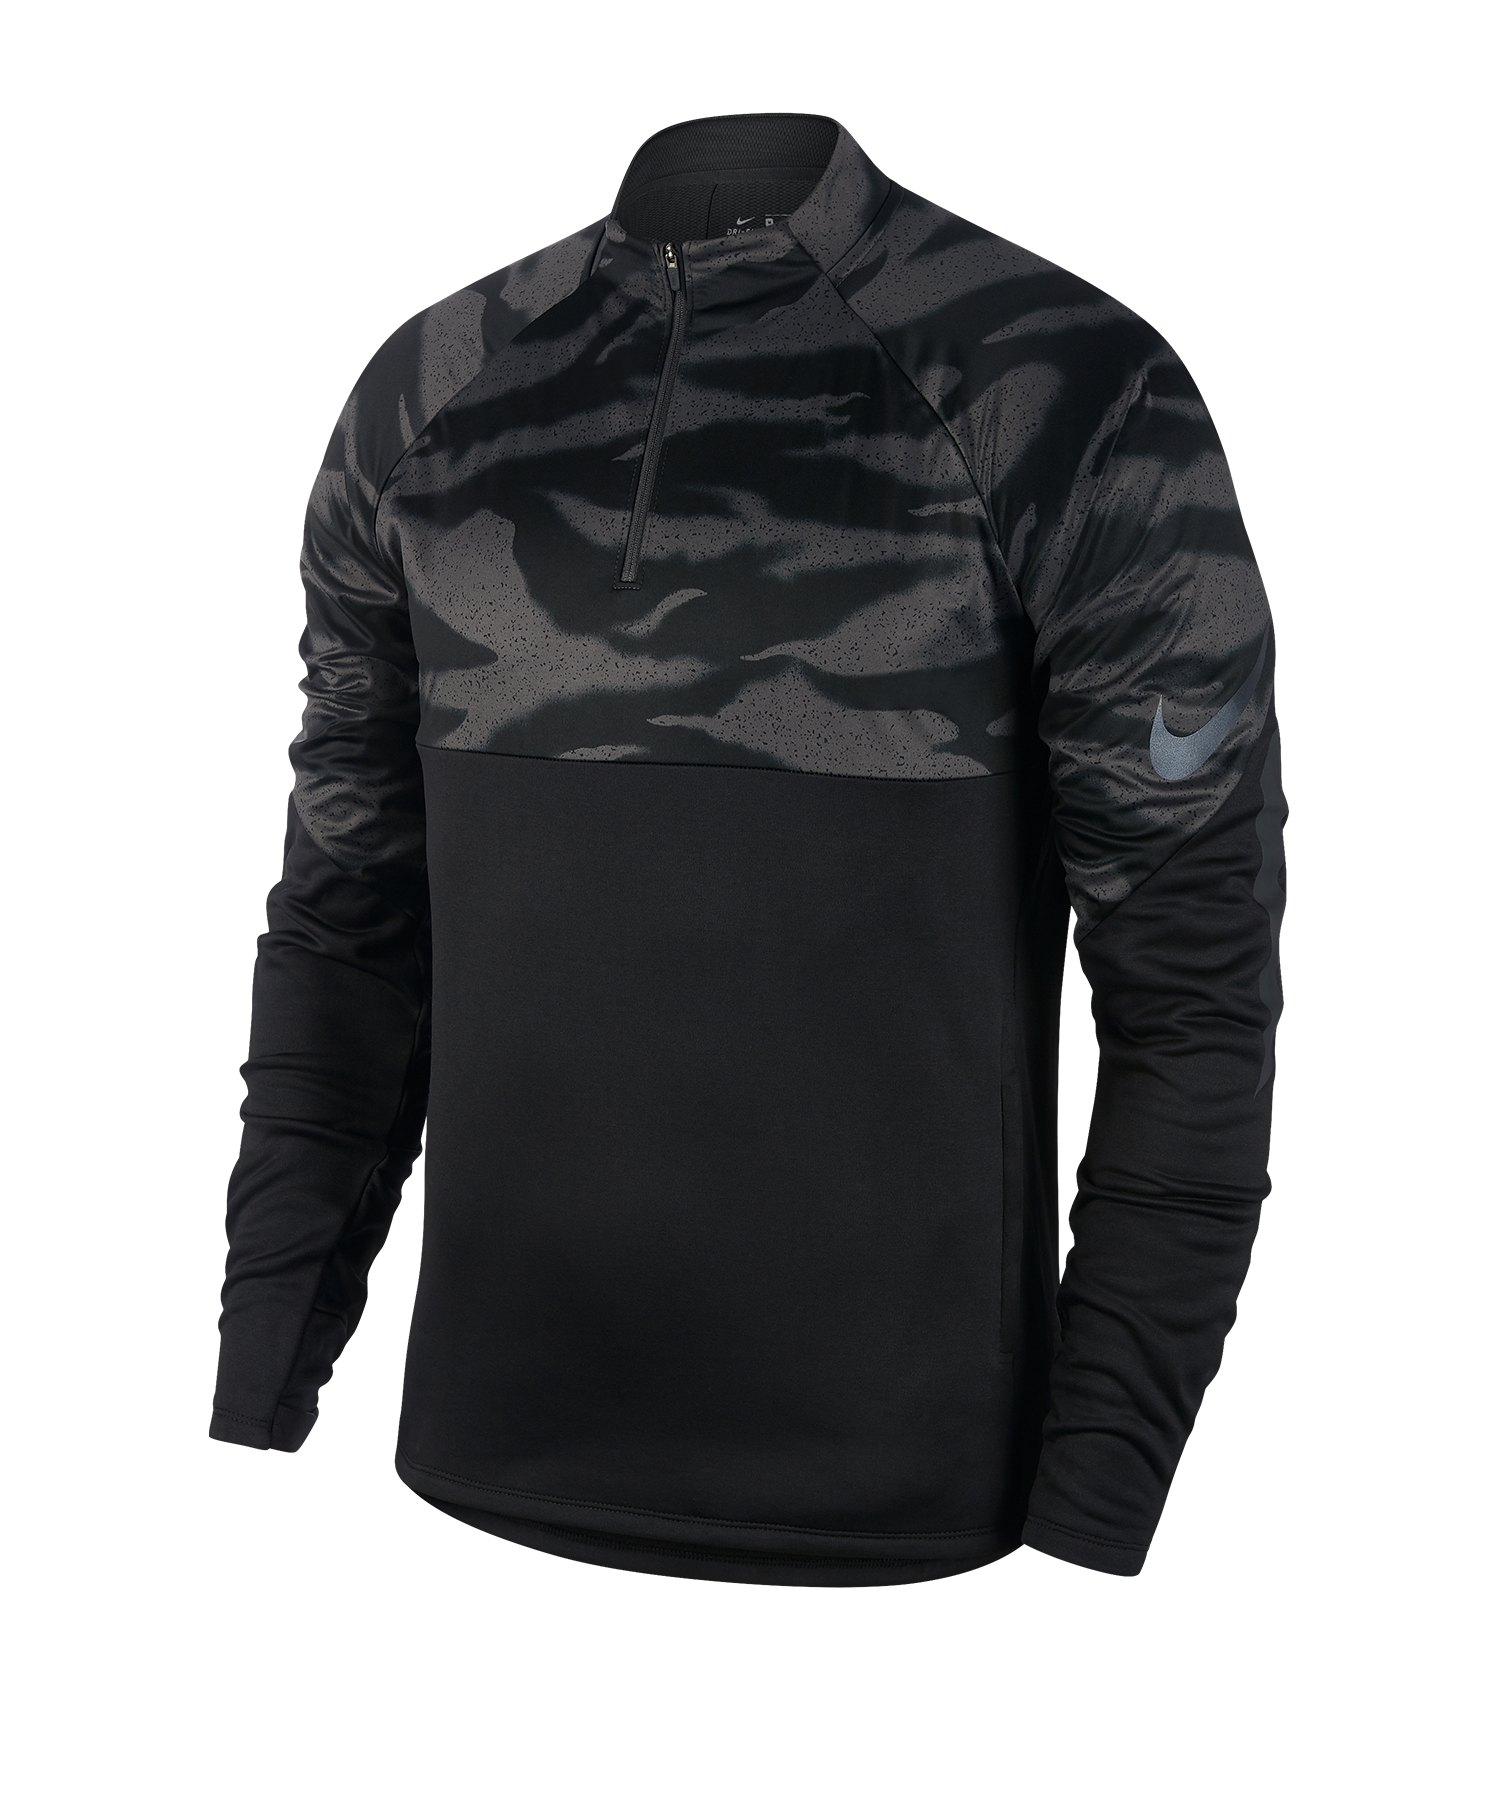 Nike Therma 1/4 Zip Trainingsweatshirt F010 - schwarz